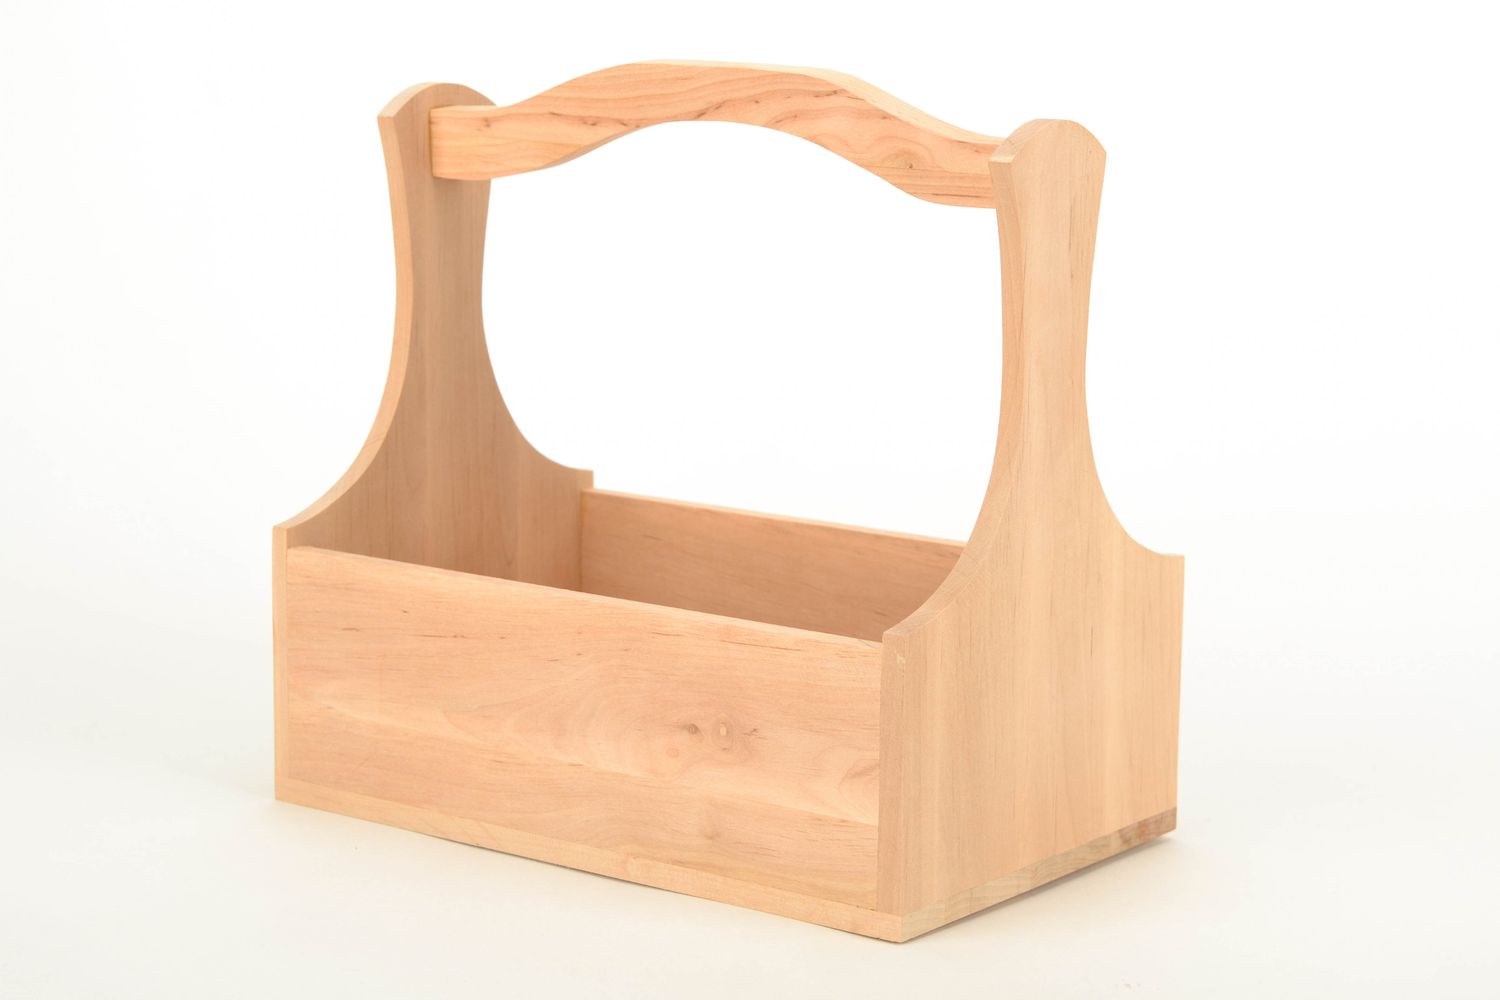 Wooden craft blank for kitchen storage container photo 1